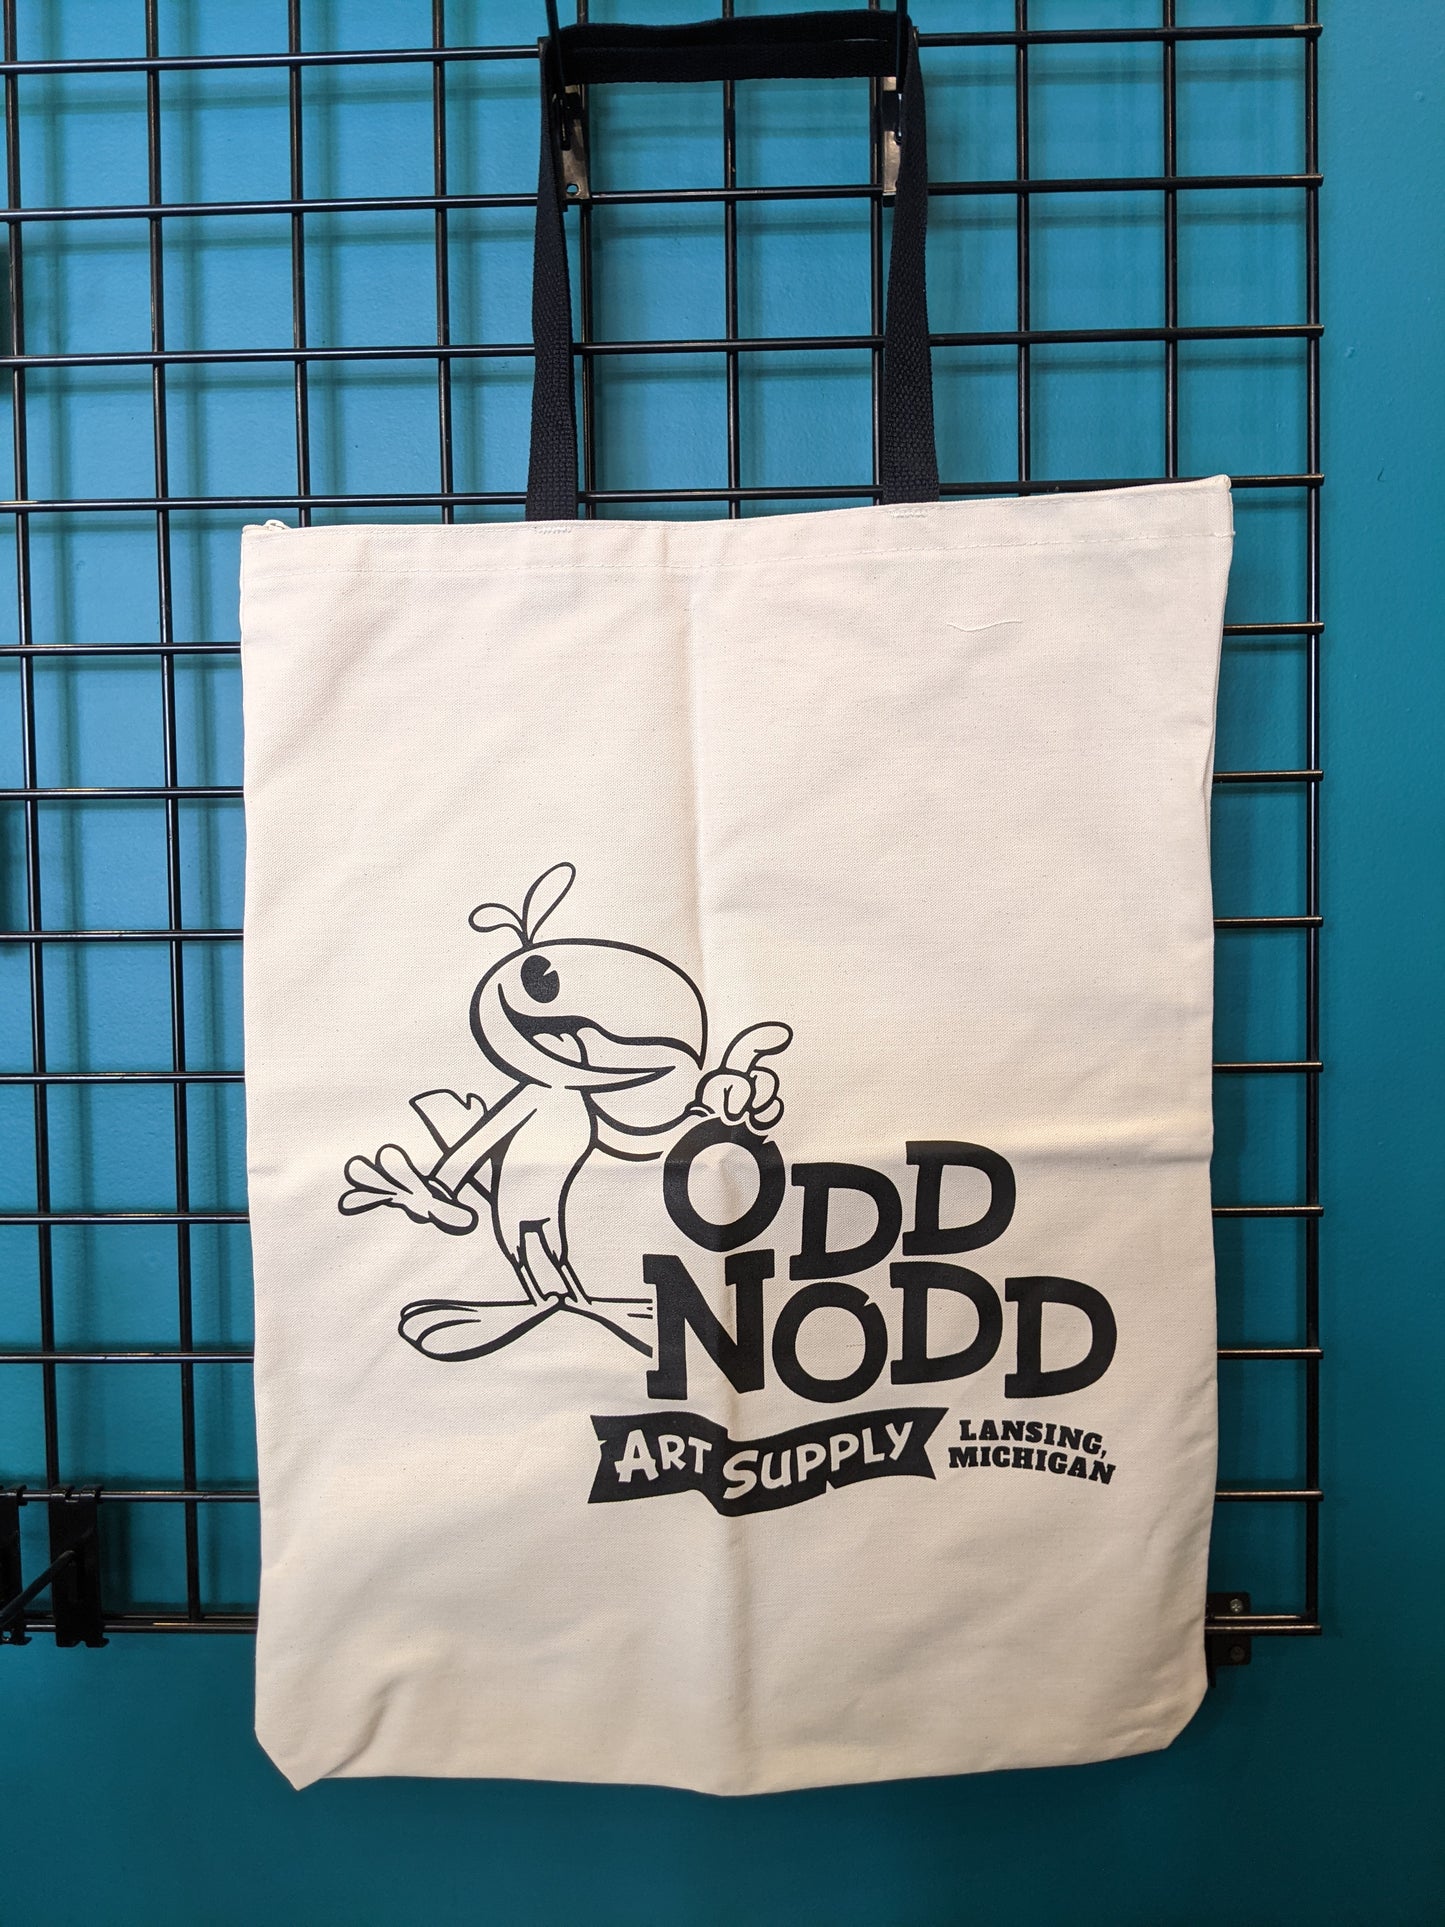 Odd Nodd's Creative Supplies Art Kits – Odd Nodd Art Supply